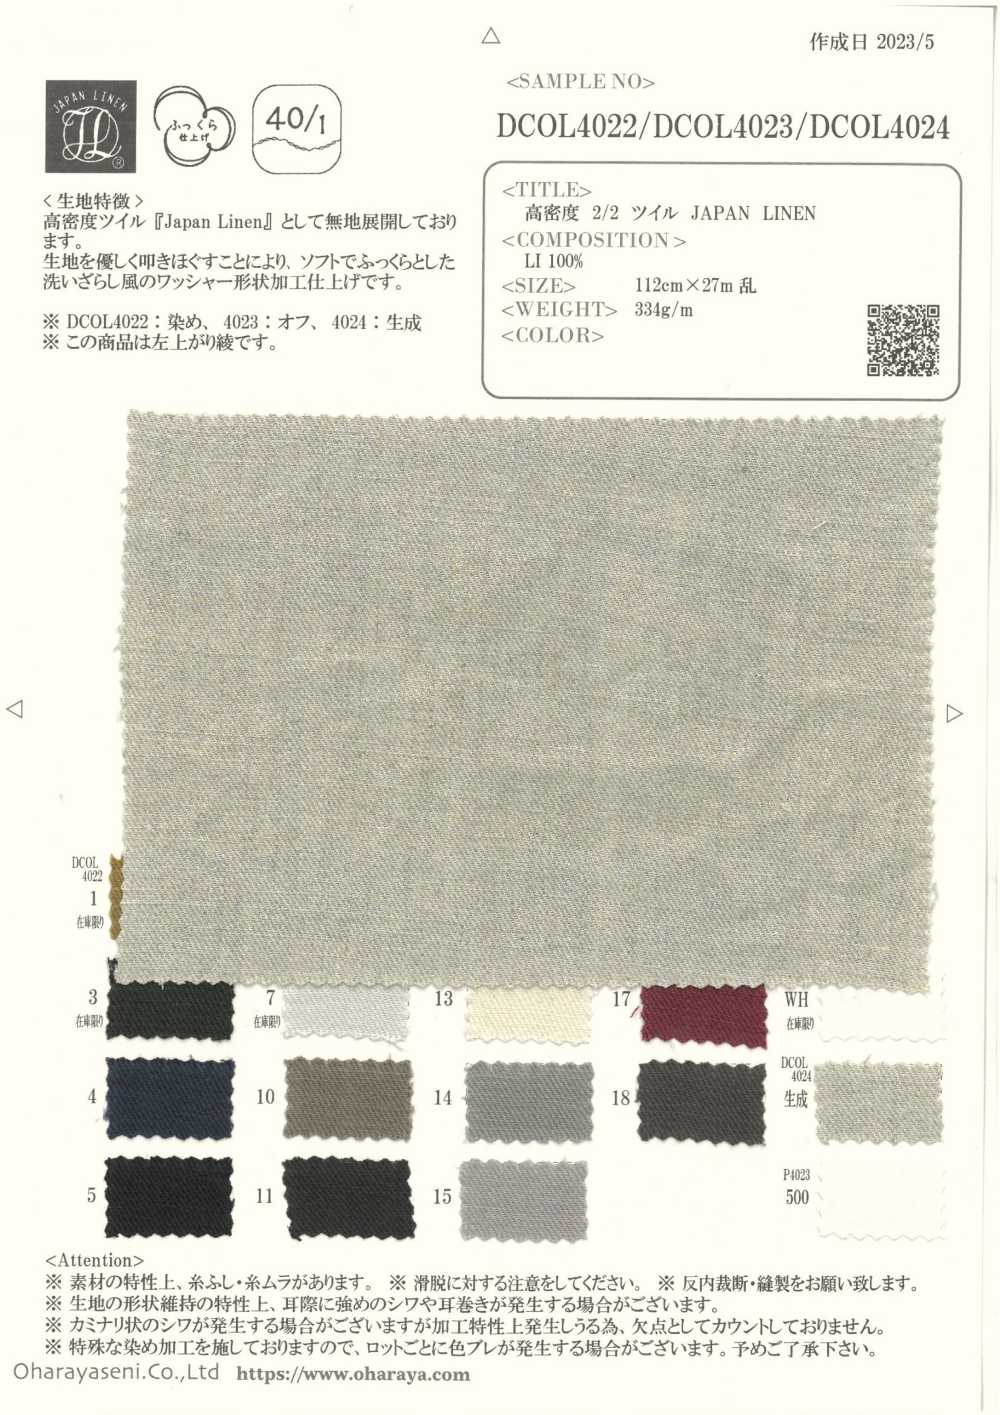 DCOL4023 High Density 2/2 Twill JAPAN LINEN[Textile / Fabric] Oharayaseni